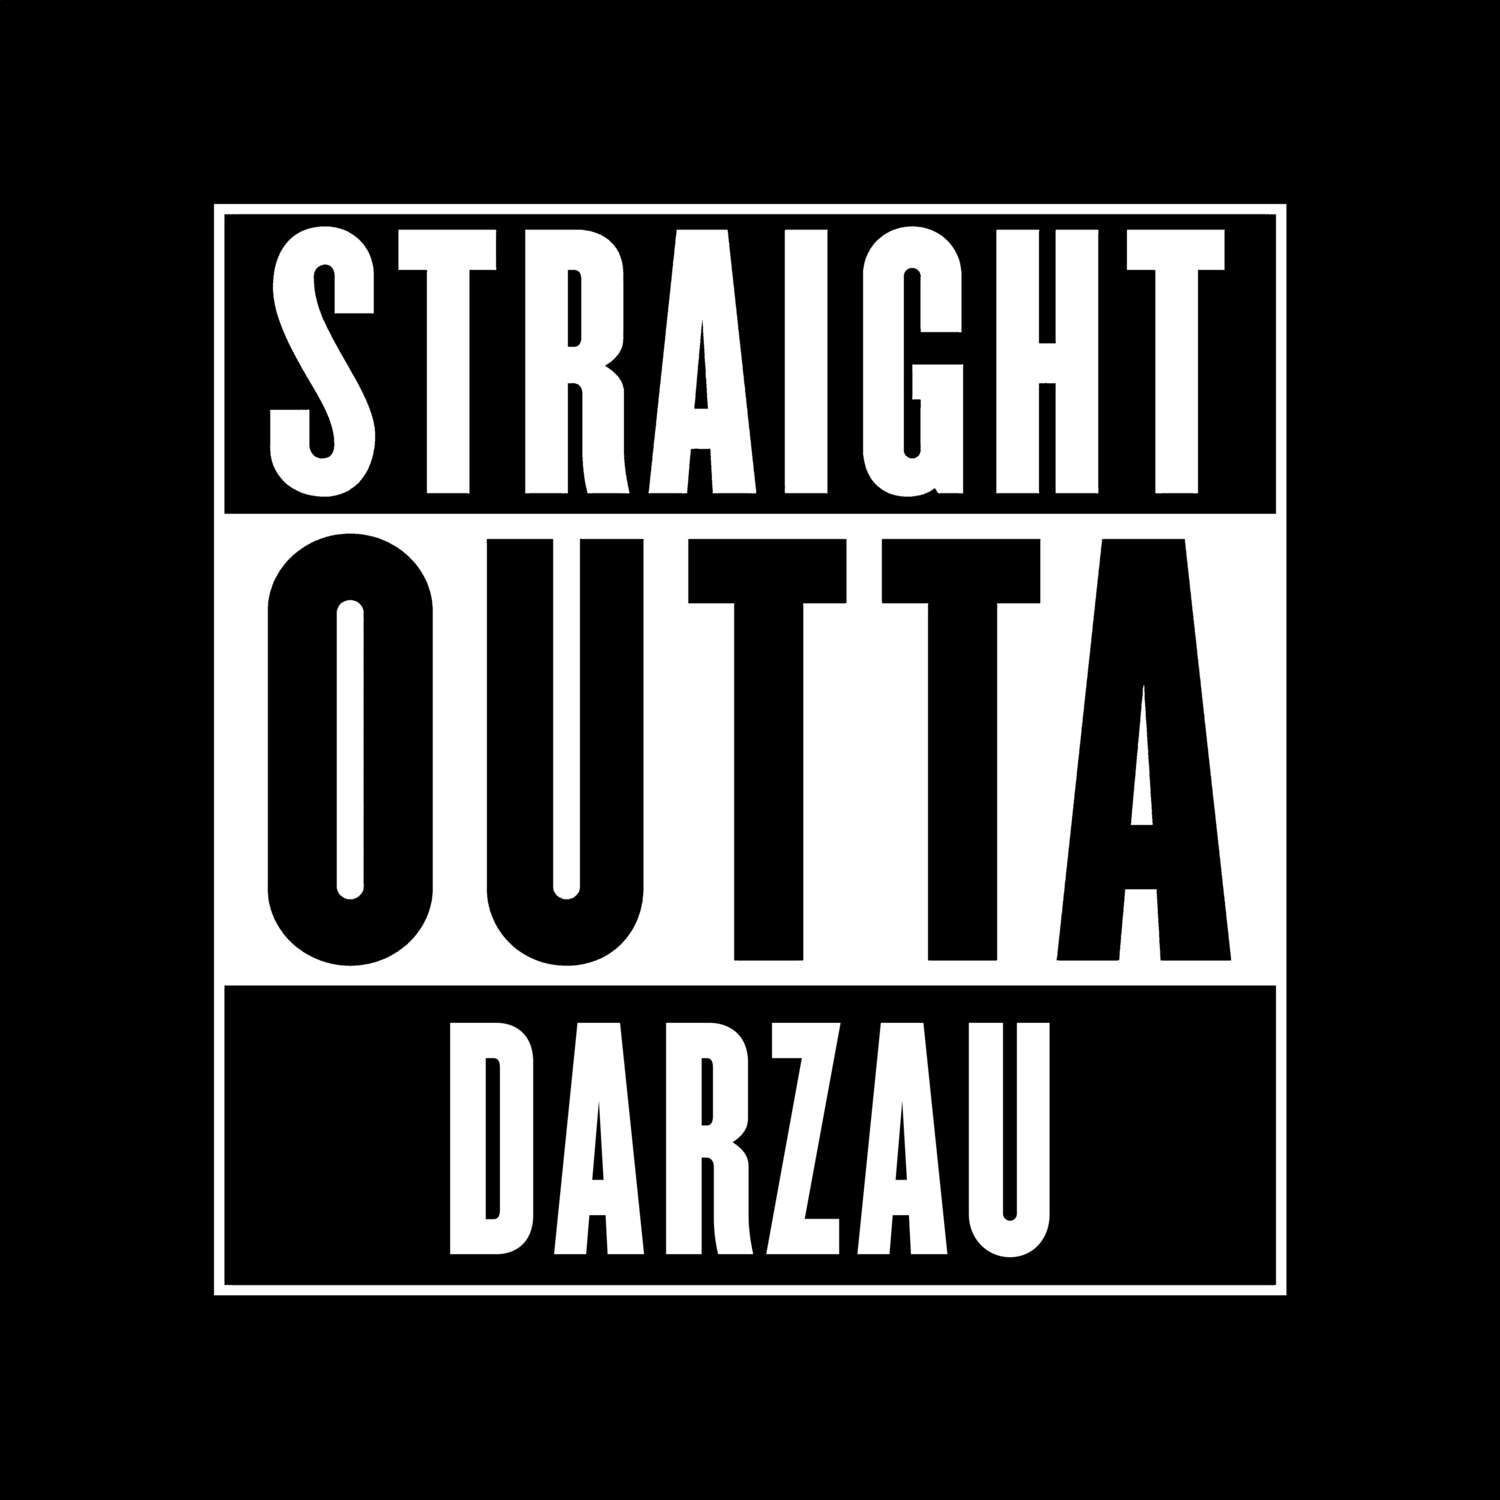 Darzau T-Shirt »Straight Outta«